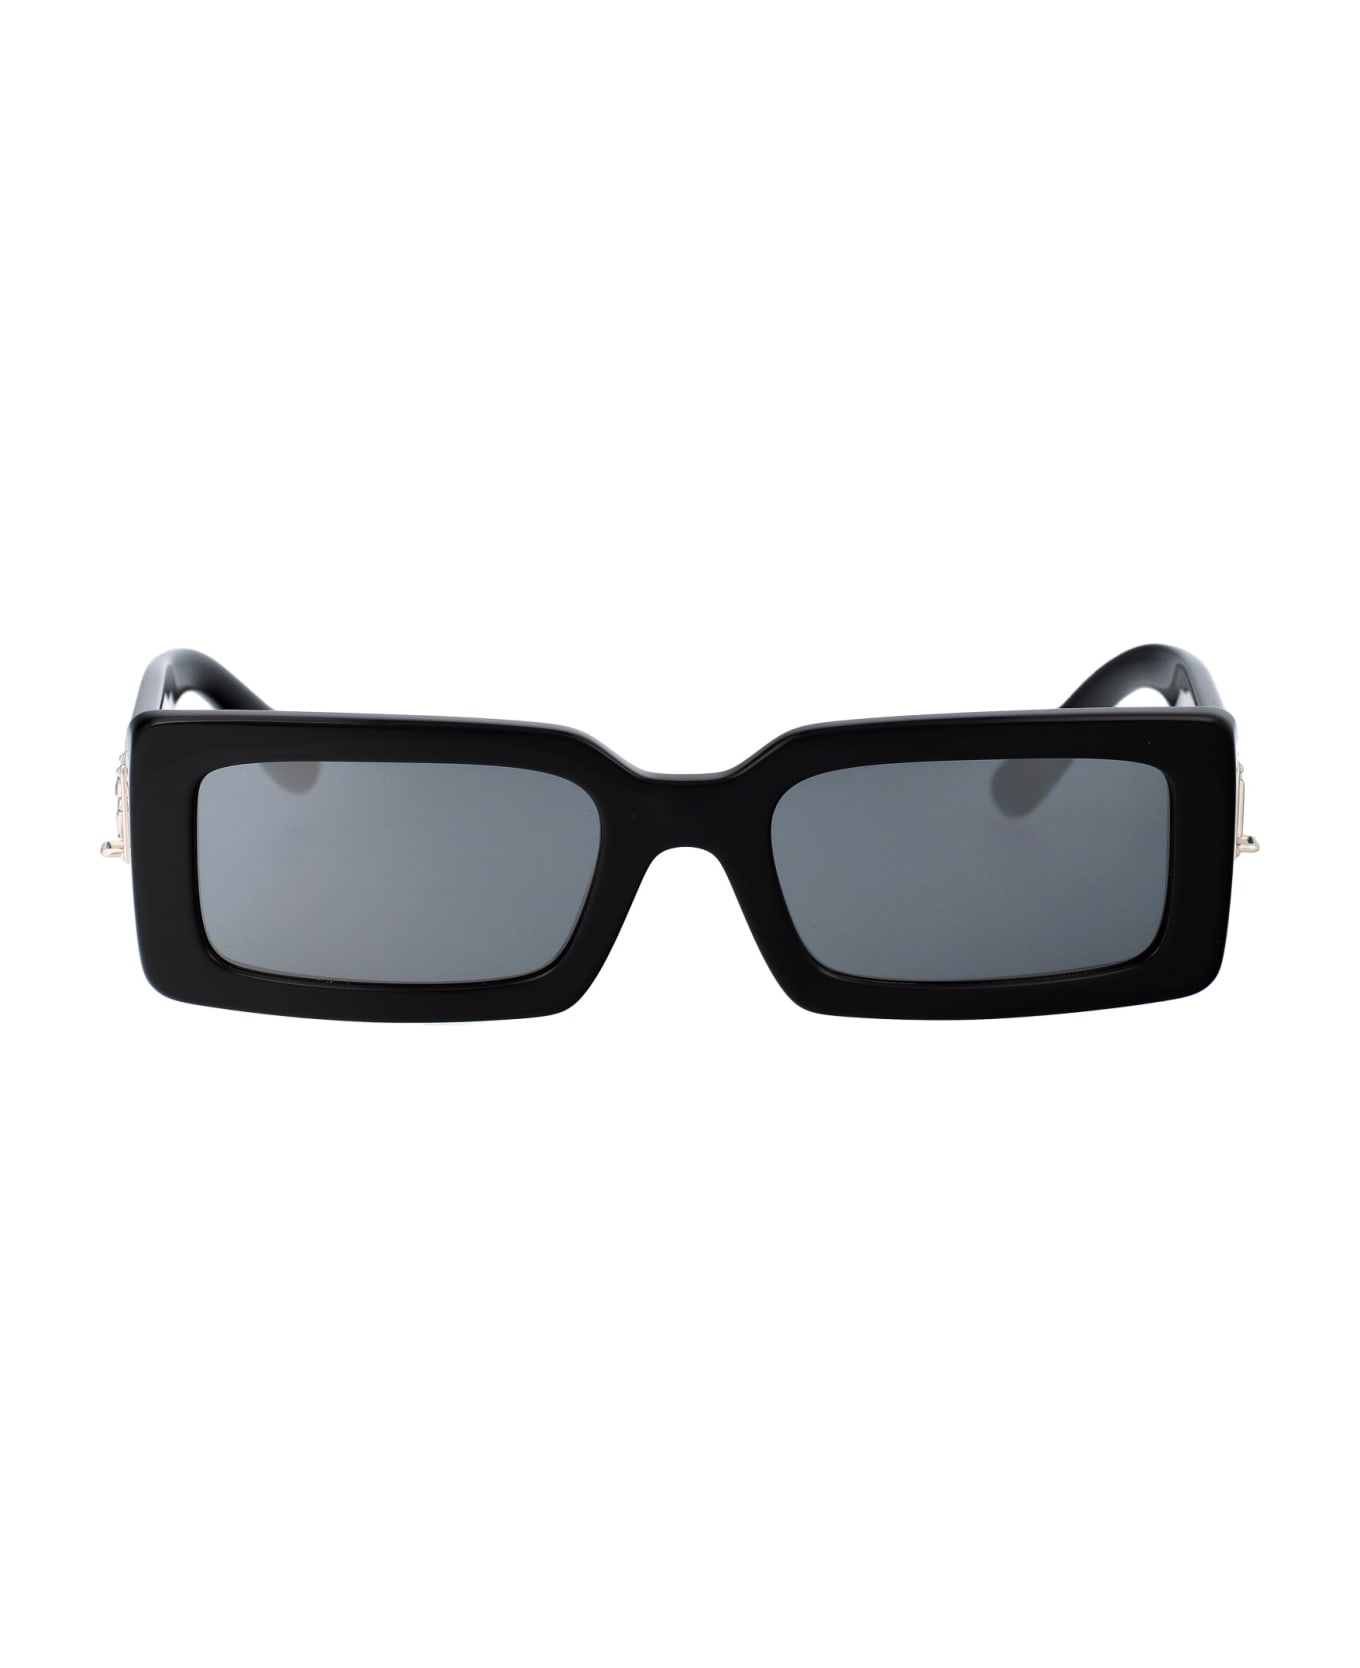 Dolce & Gabbana Eyewear 0dg4416 Sunglasses - 501/6G BLACK